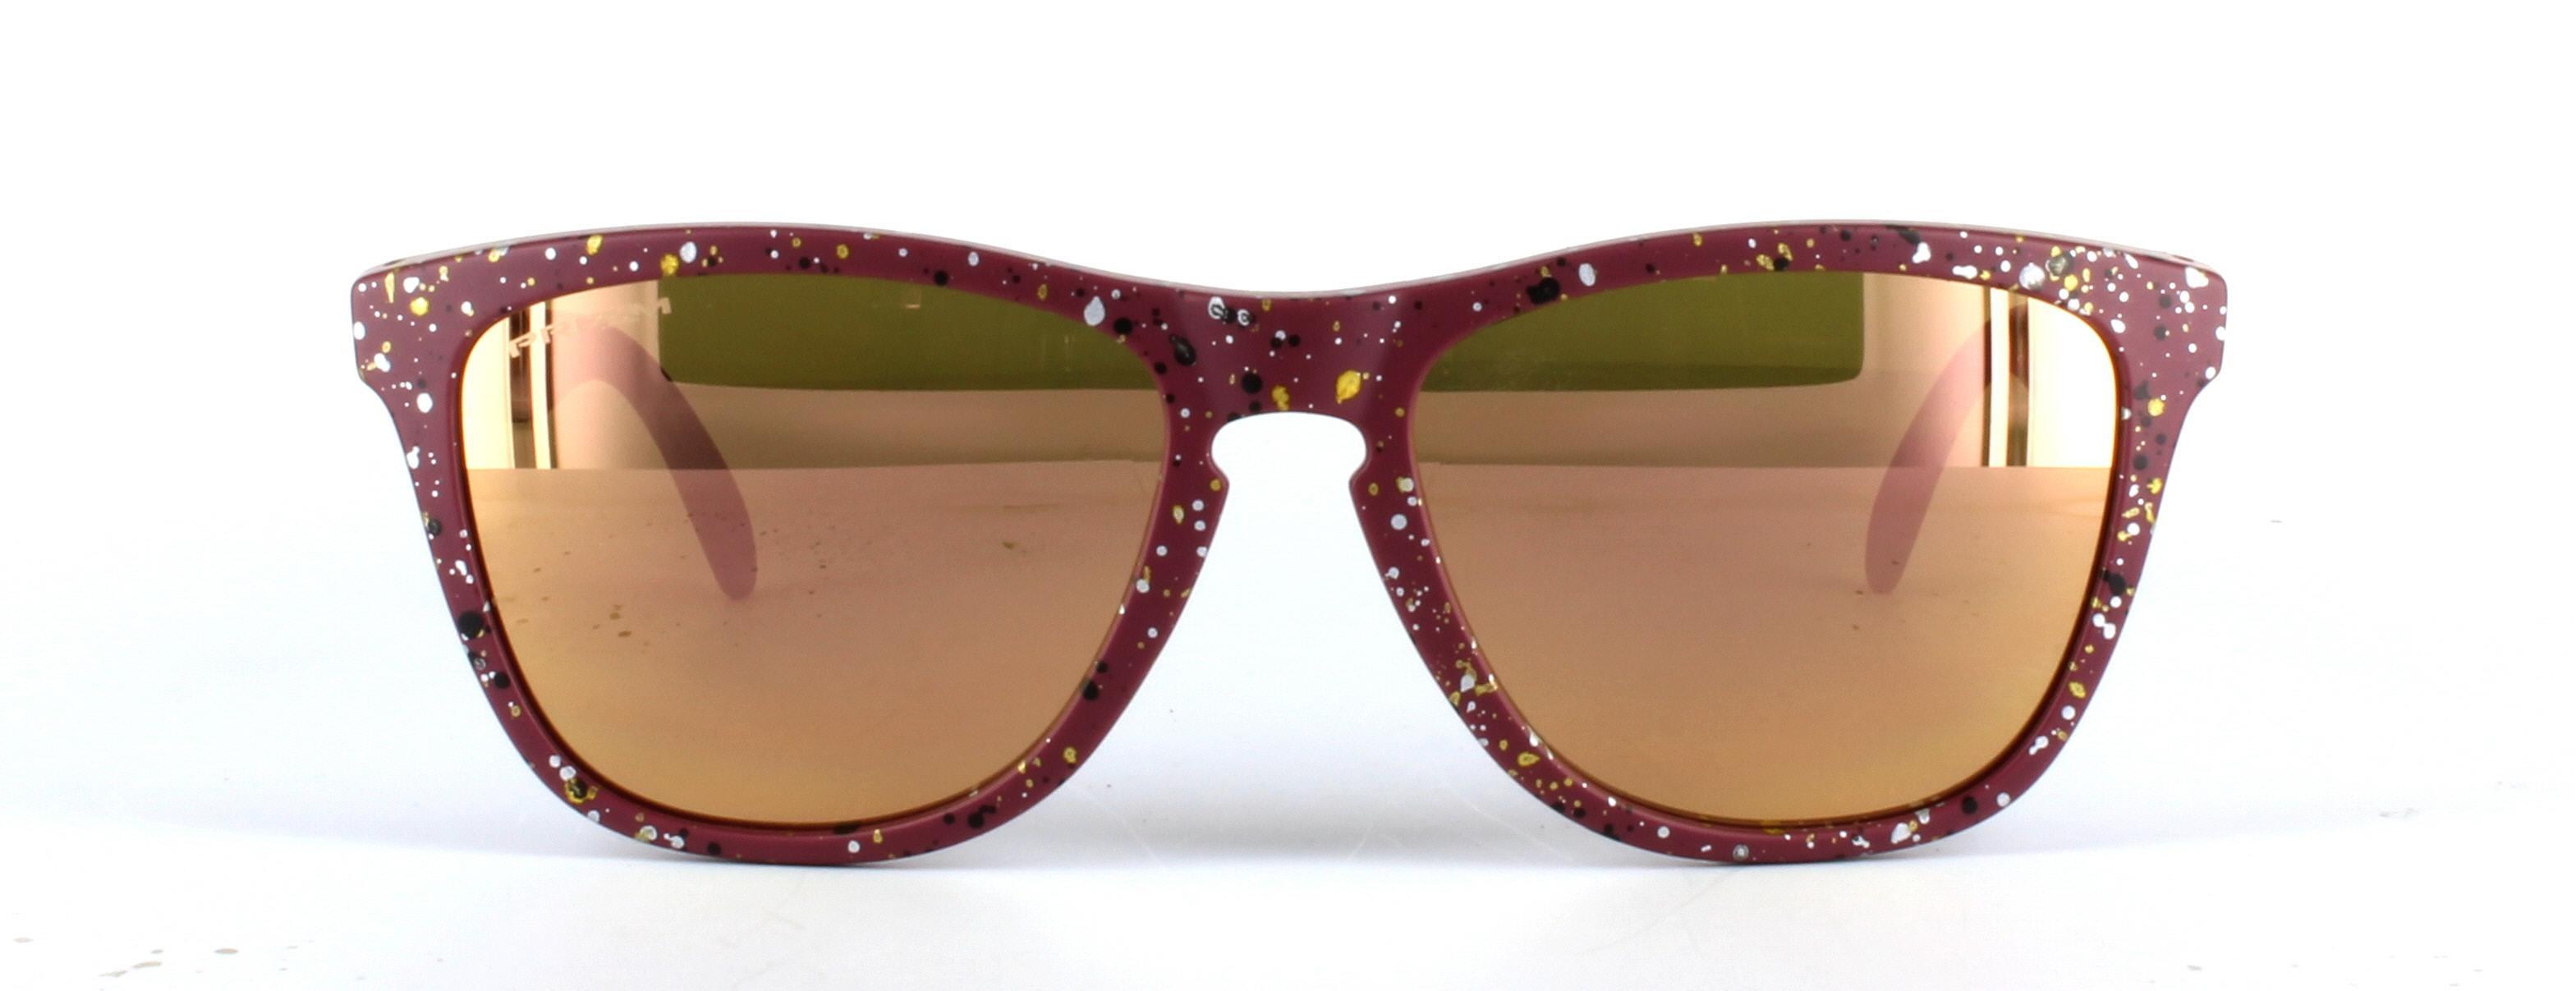 Oakley (O9428) Red Full Rim Rectangular Plastic Prescription Sunglasses - Image View 5